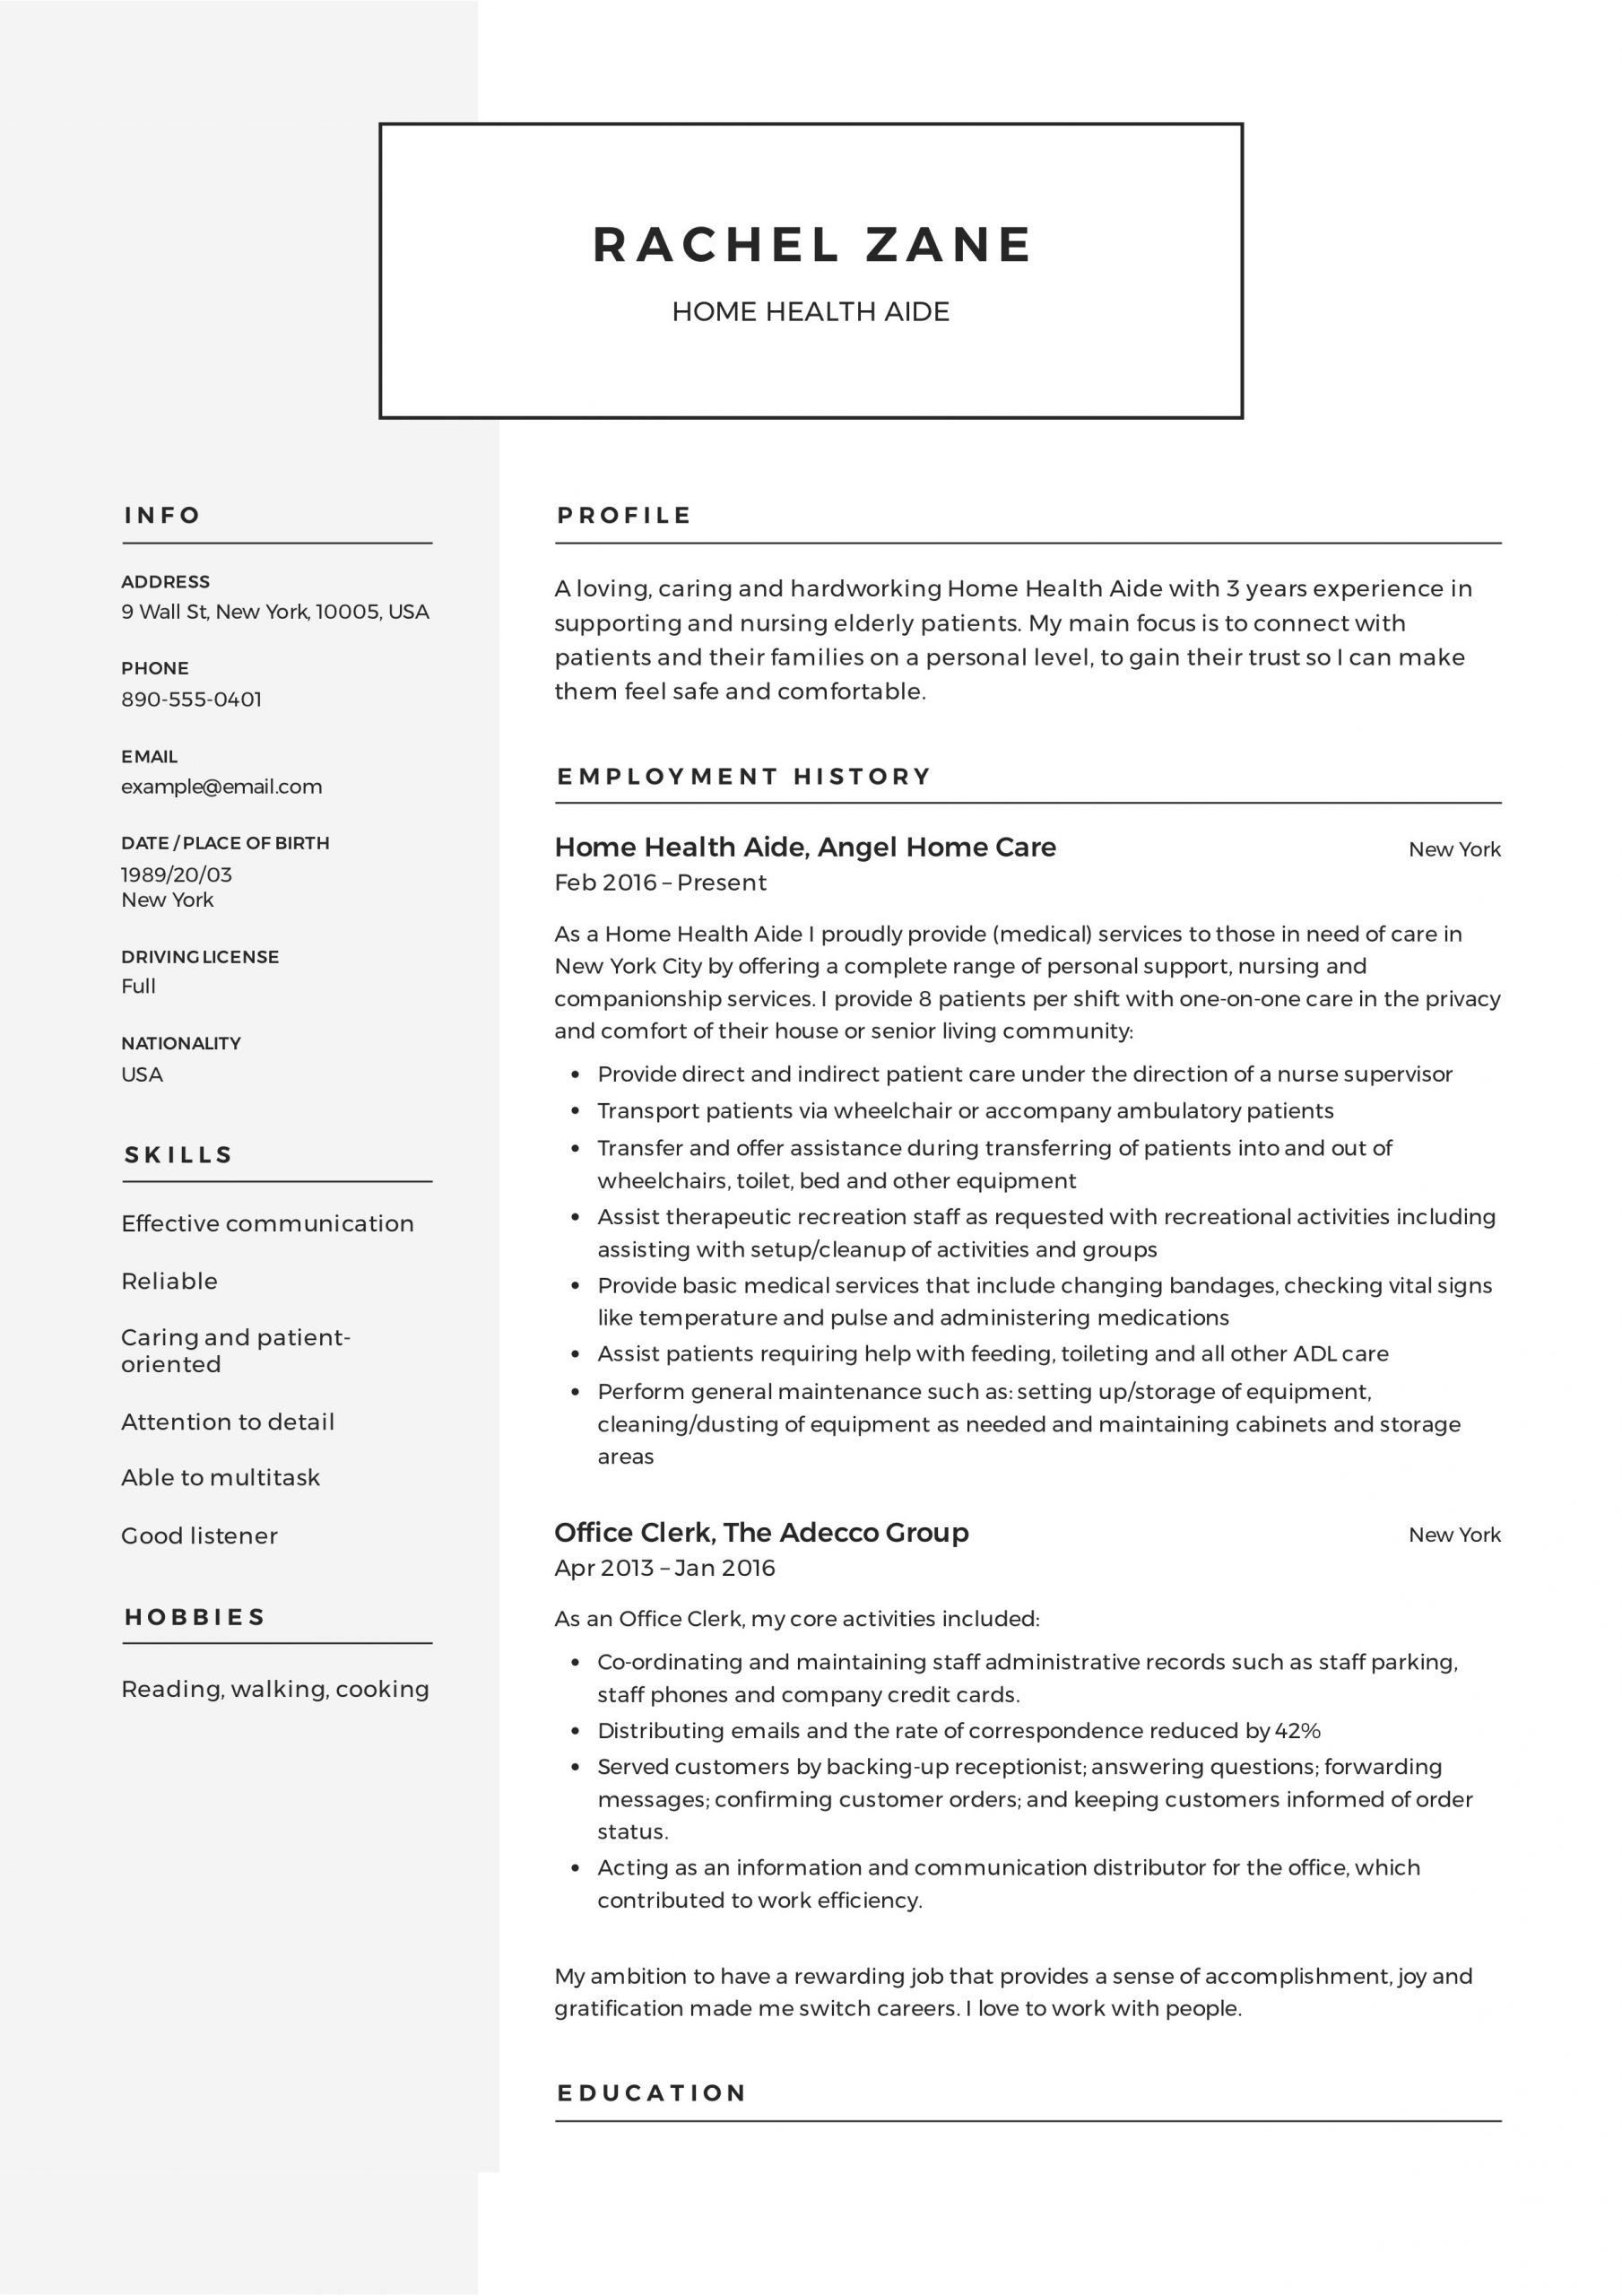 Sample Resume for Home Care Nurse Home Care attendant Resume Example September 2021